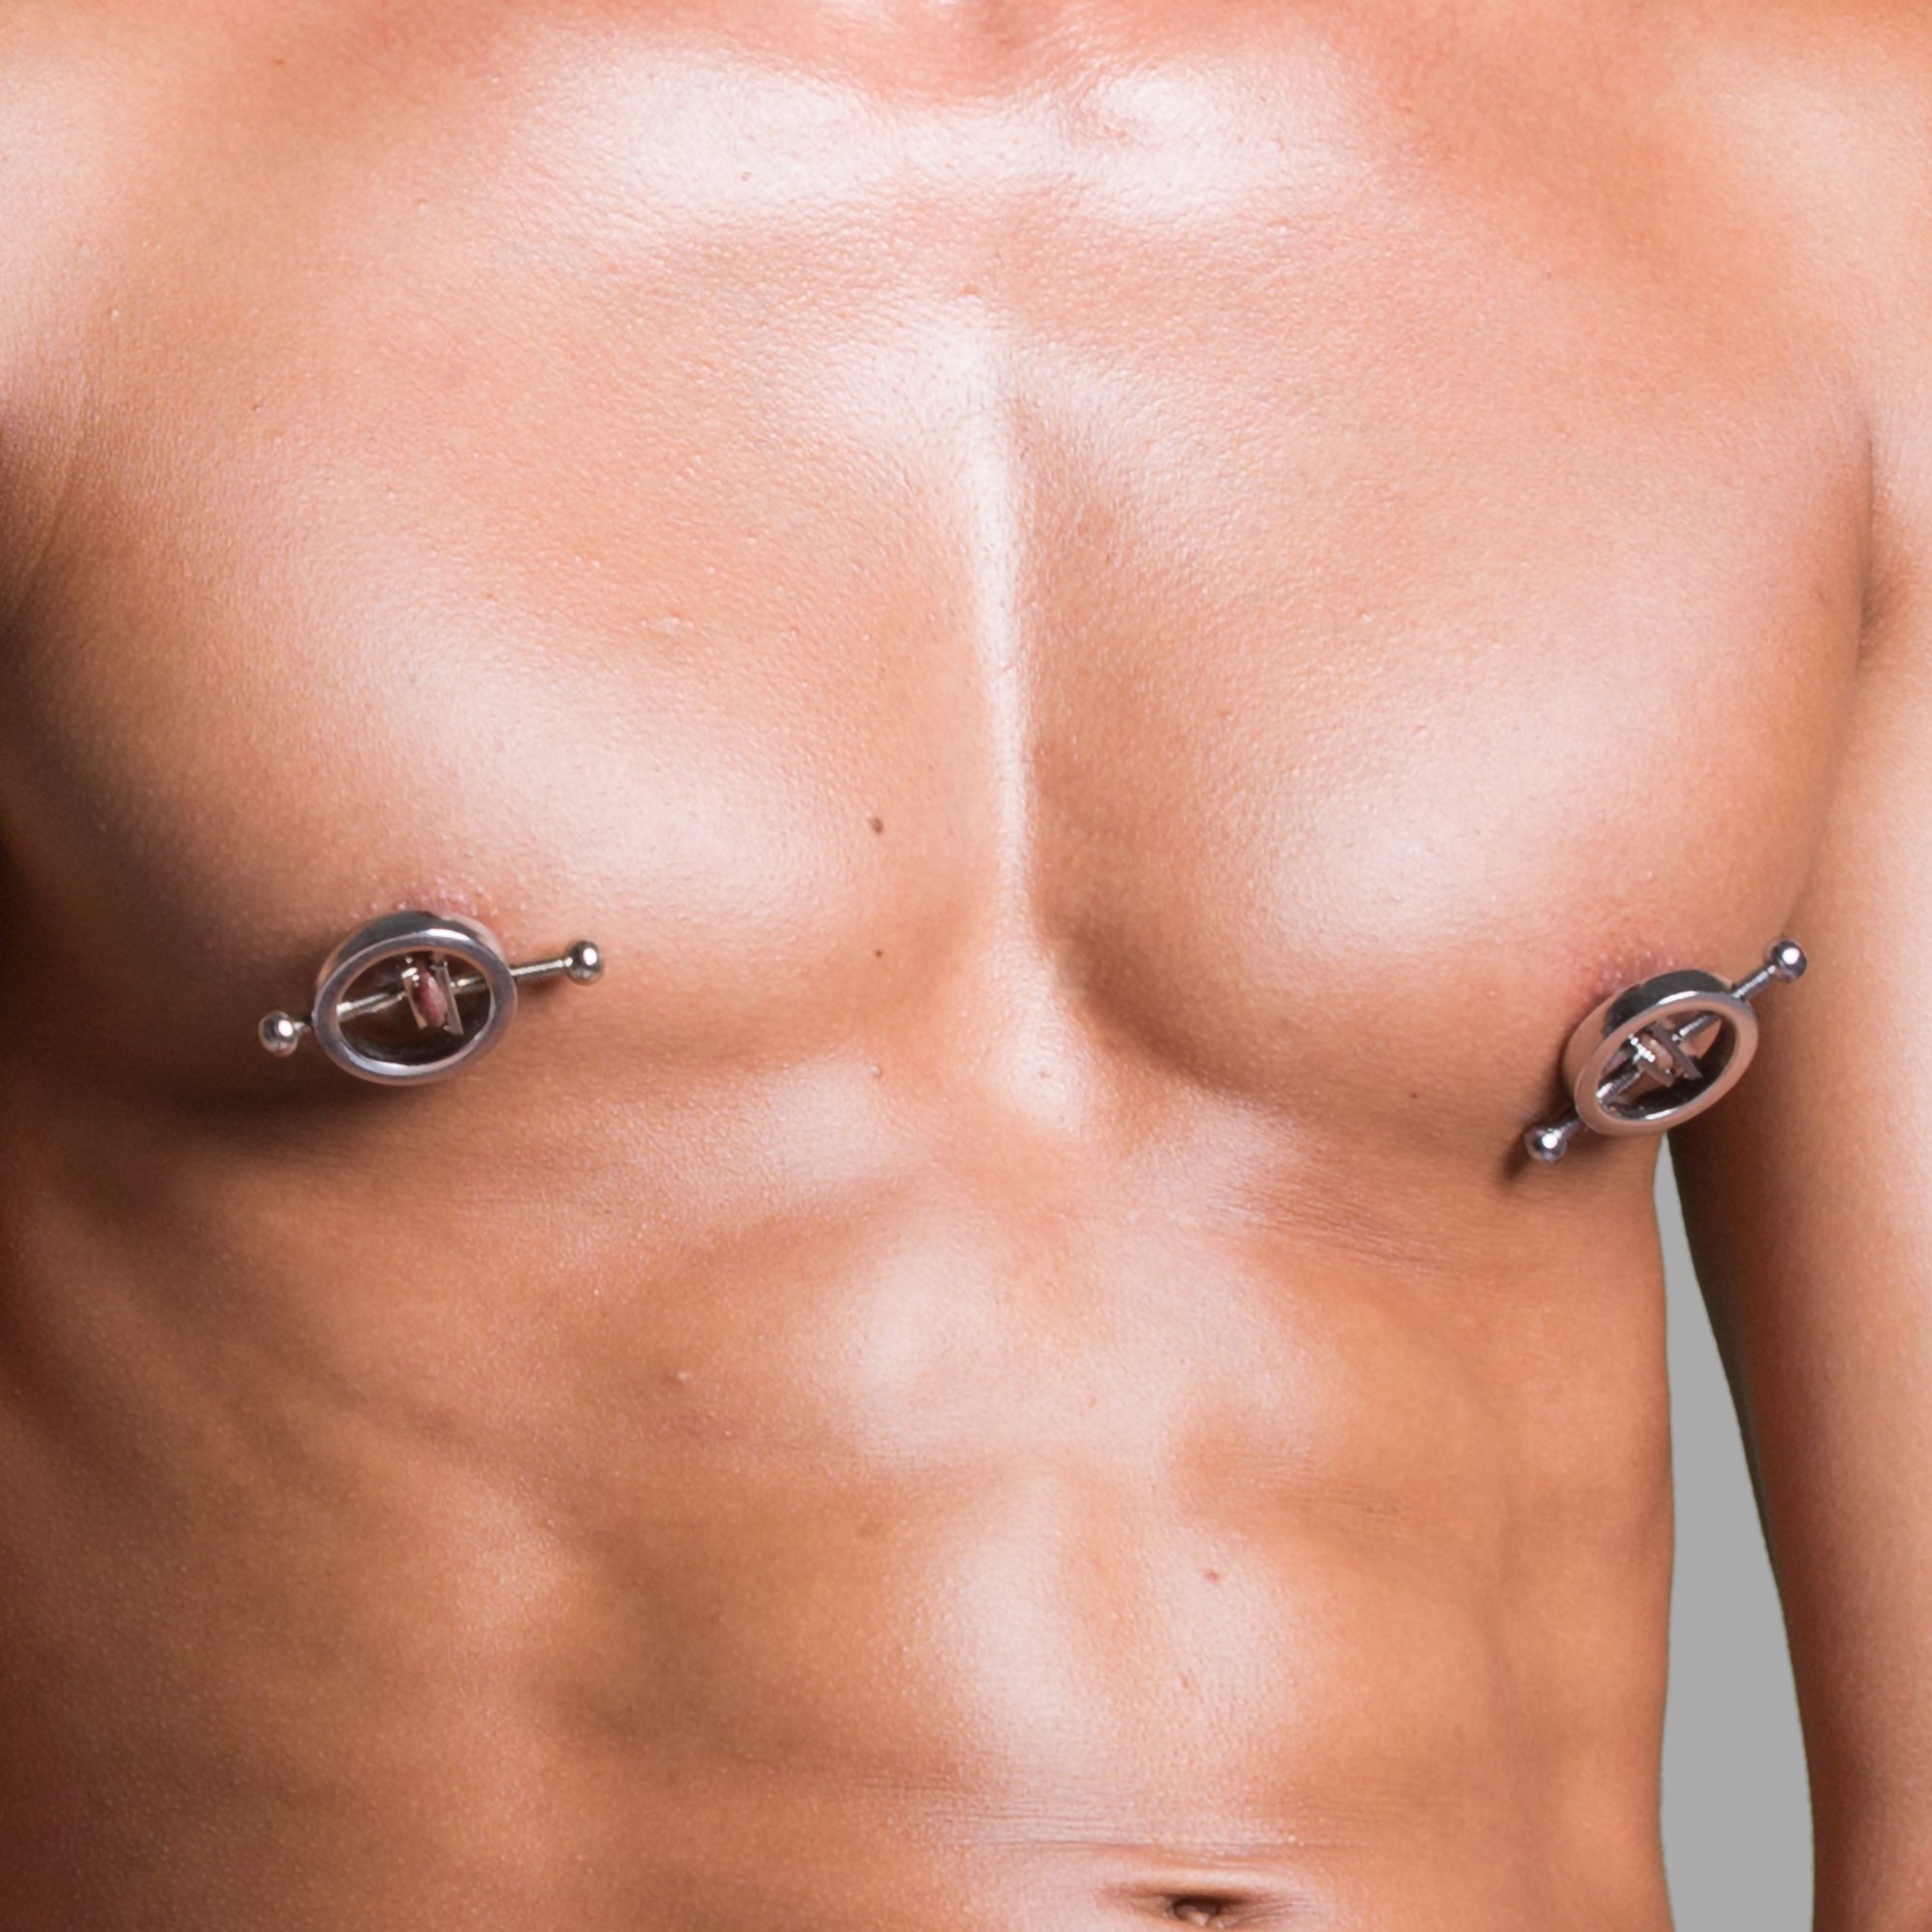 Male nipple clamps photo